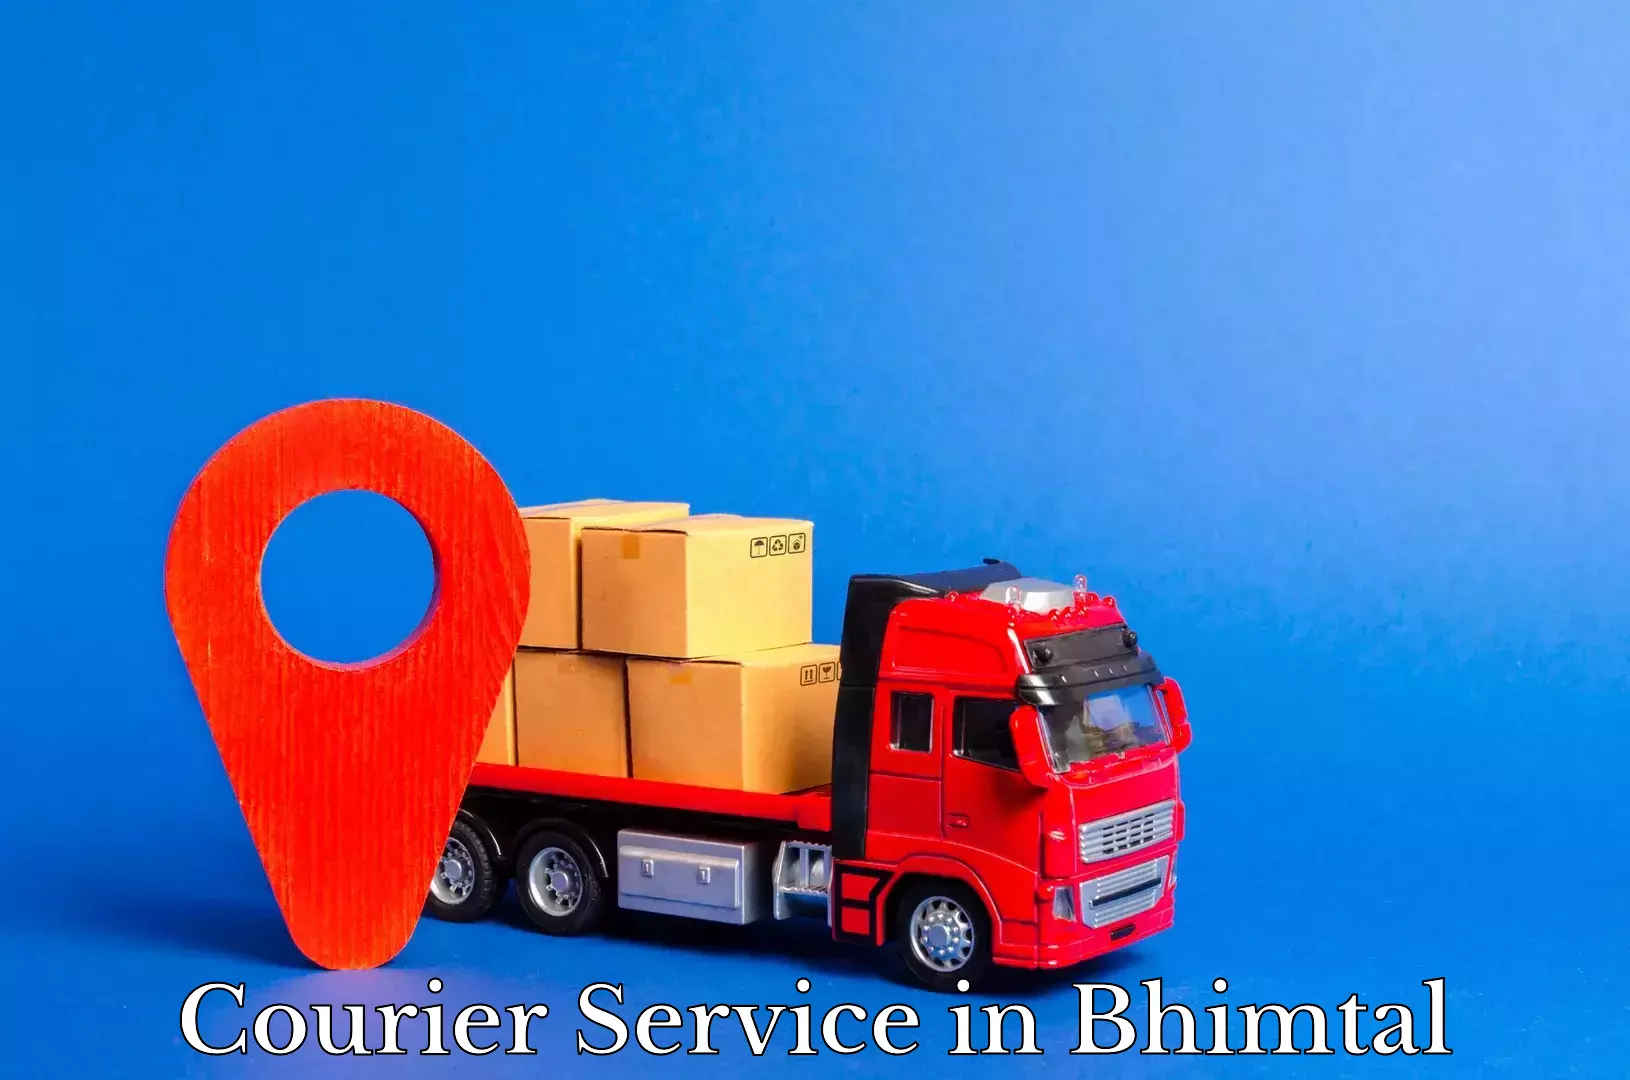 Global logistics network in Bhimtal